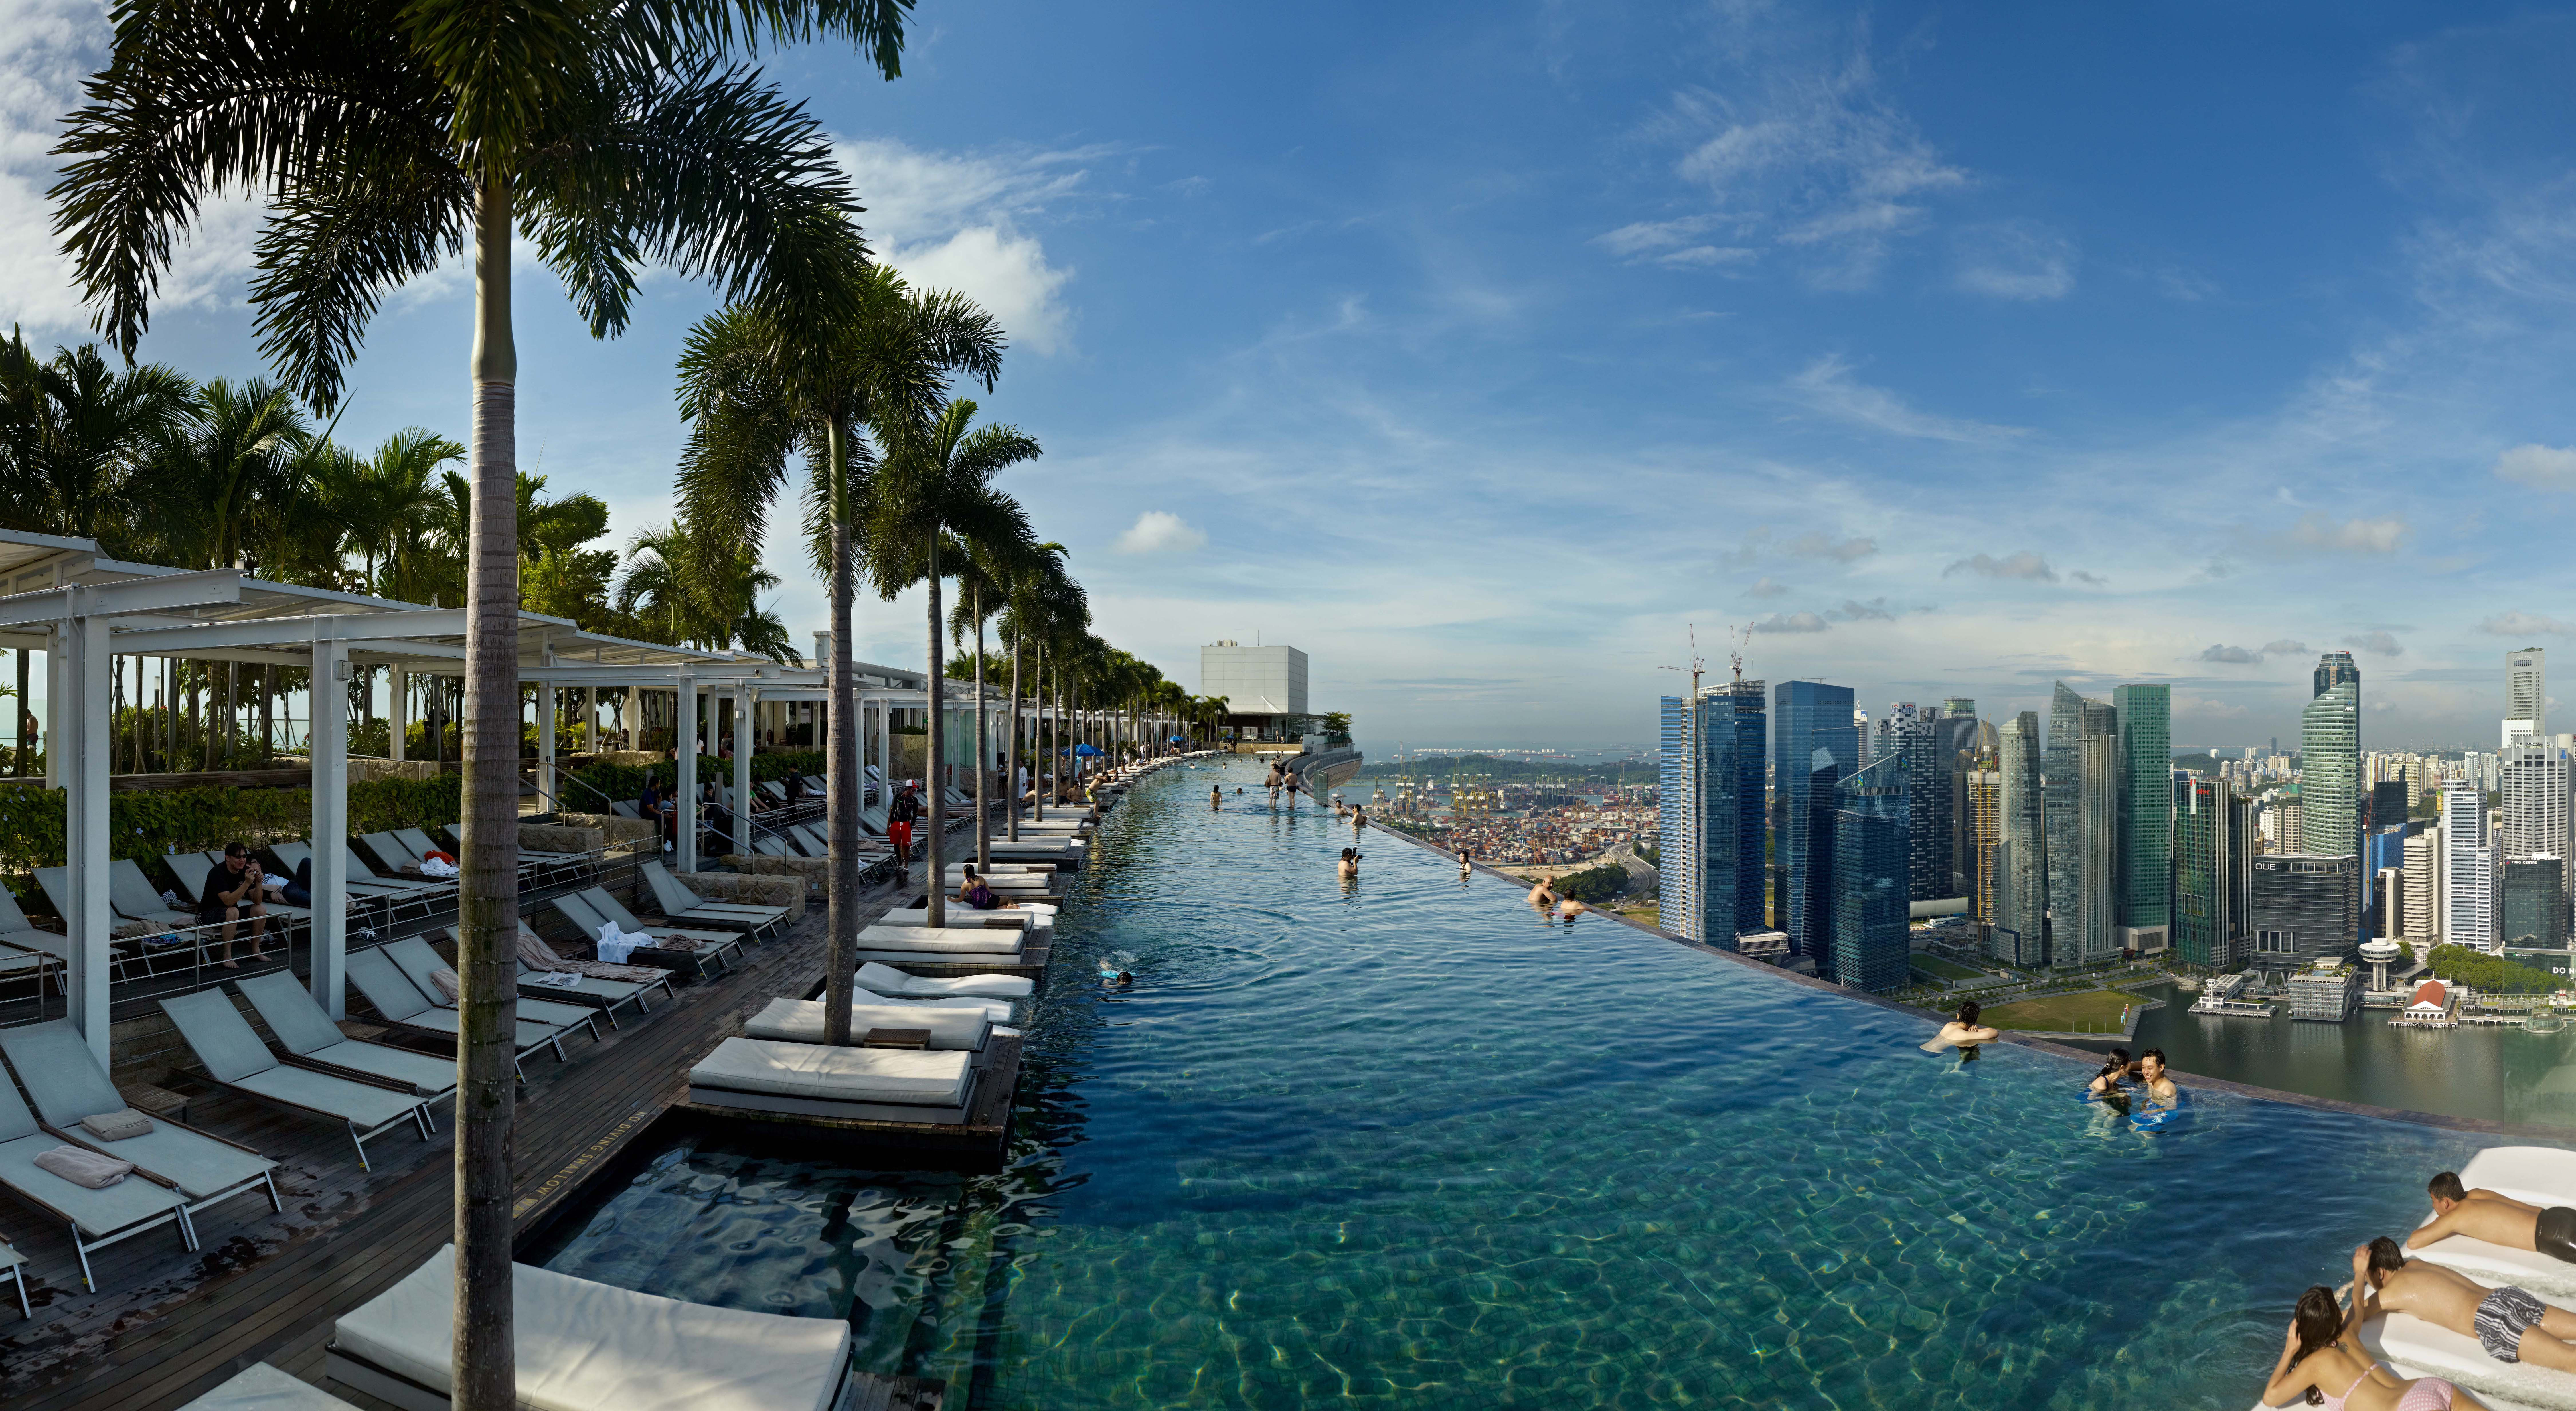  singapore sands infinity pool